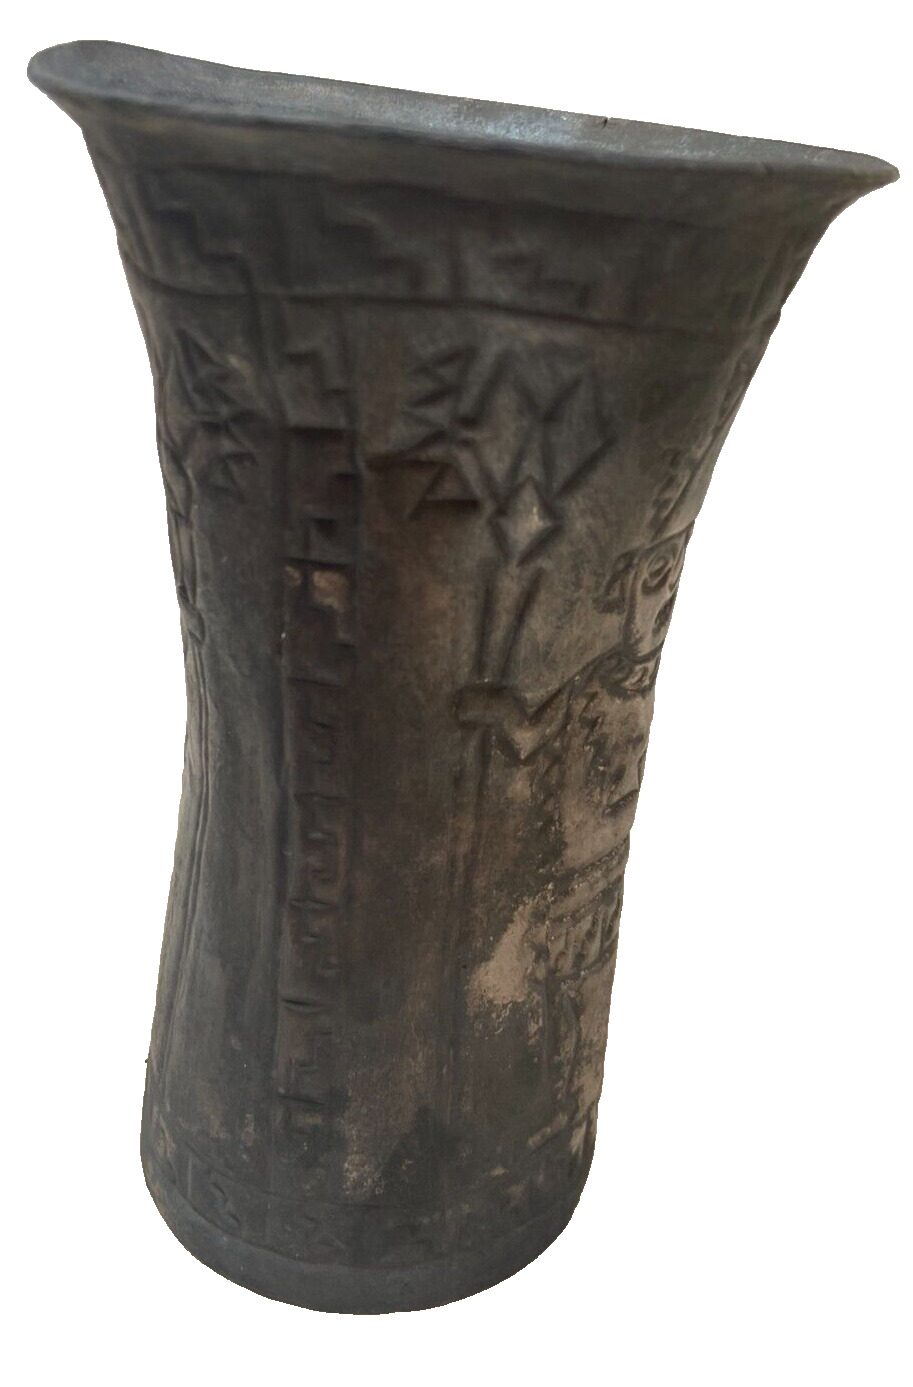 Authentic Ancient Pre-Columbian Chimu/Moche Silver Votive Cup